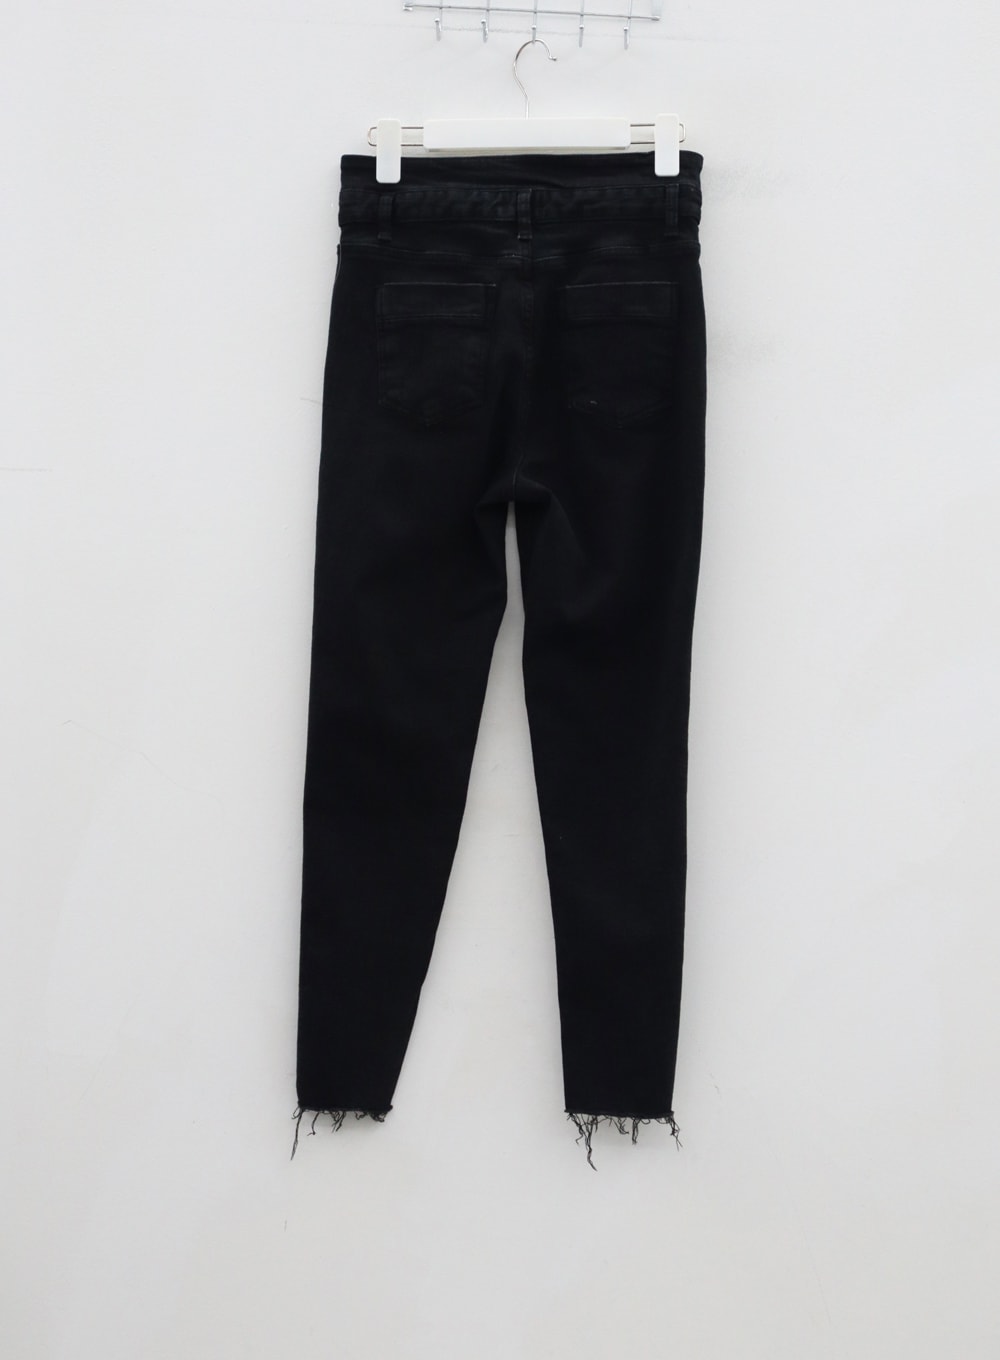 Gap Skinny Ankle Pants Size 4R- True Indigo- NWT | eBay